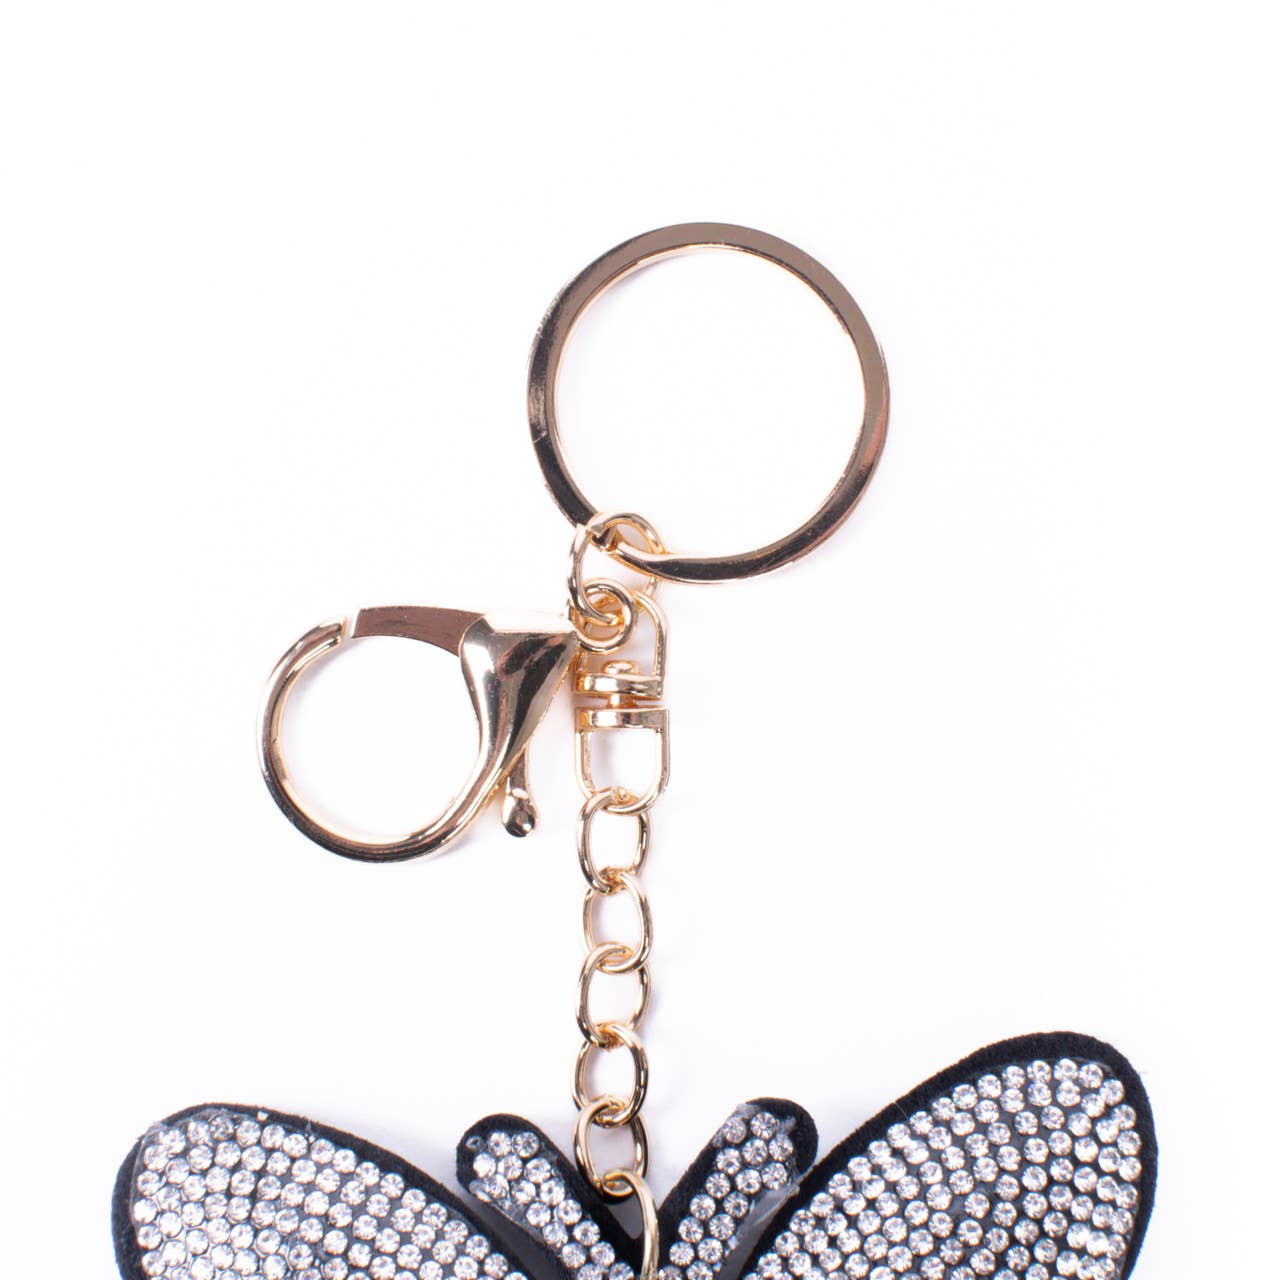 Bling Crystal Rhinestone Black Butterfly Keychain